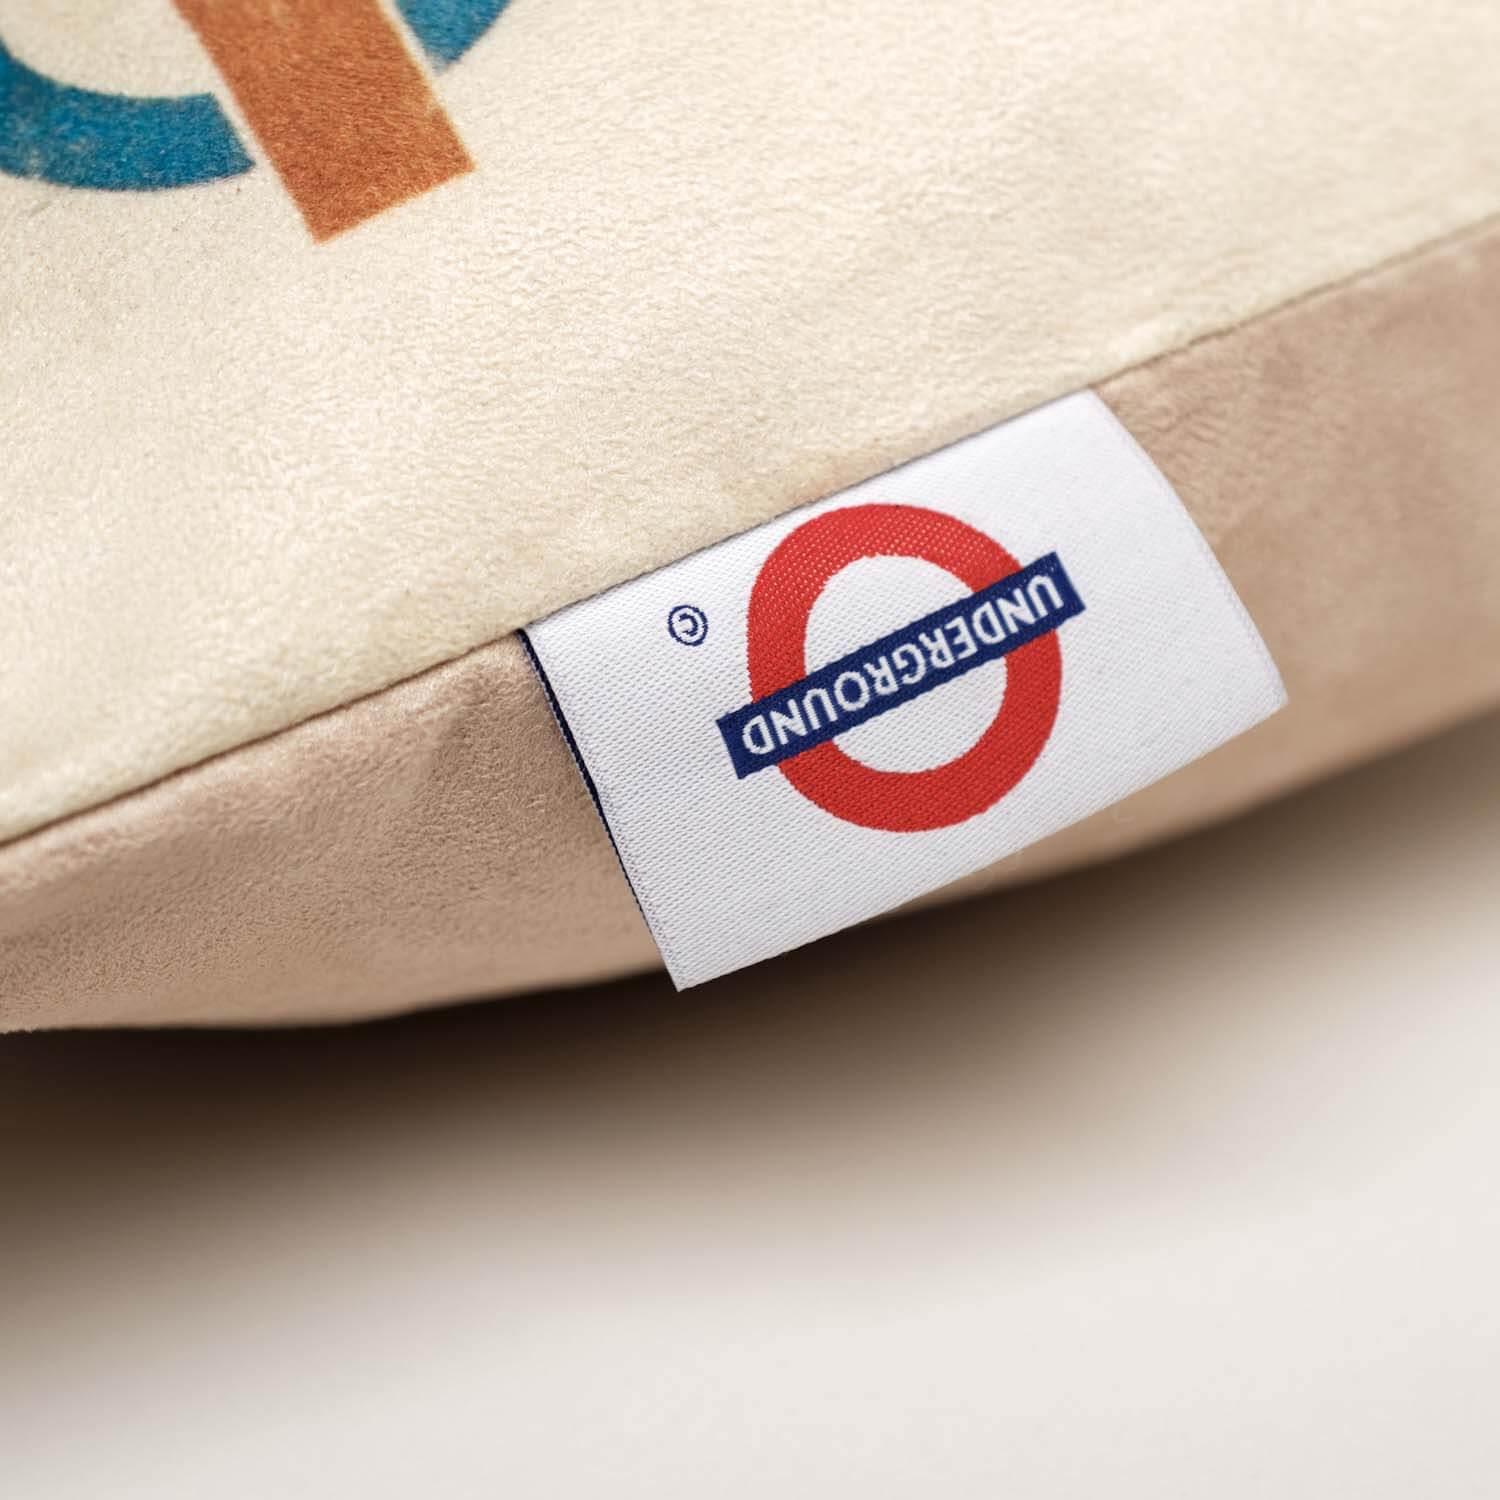 To The Zoo - London Transport Cushion - Handmade Cushions UK - WeLoveCushions